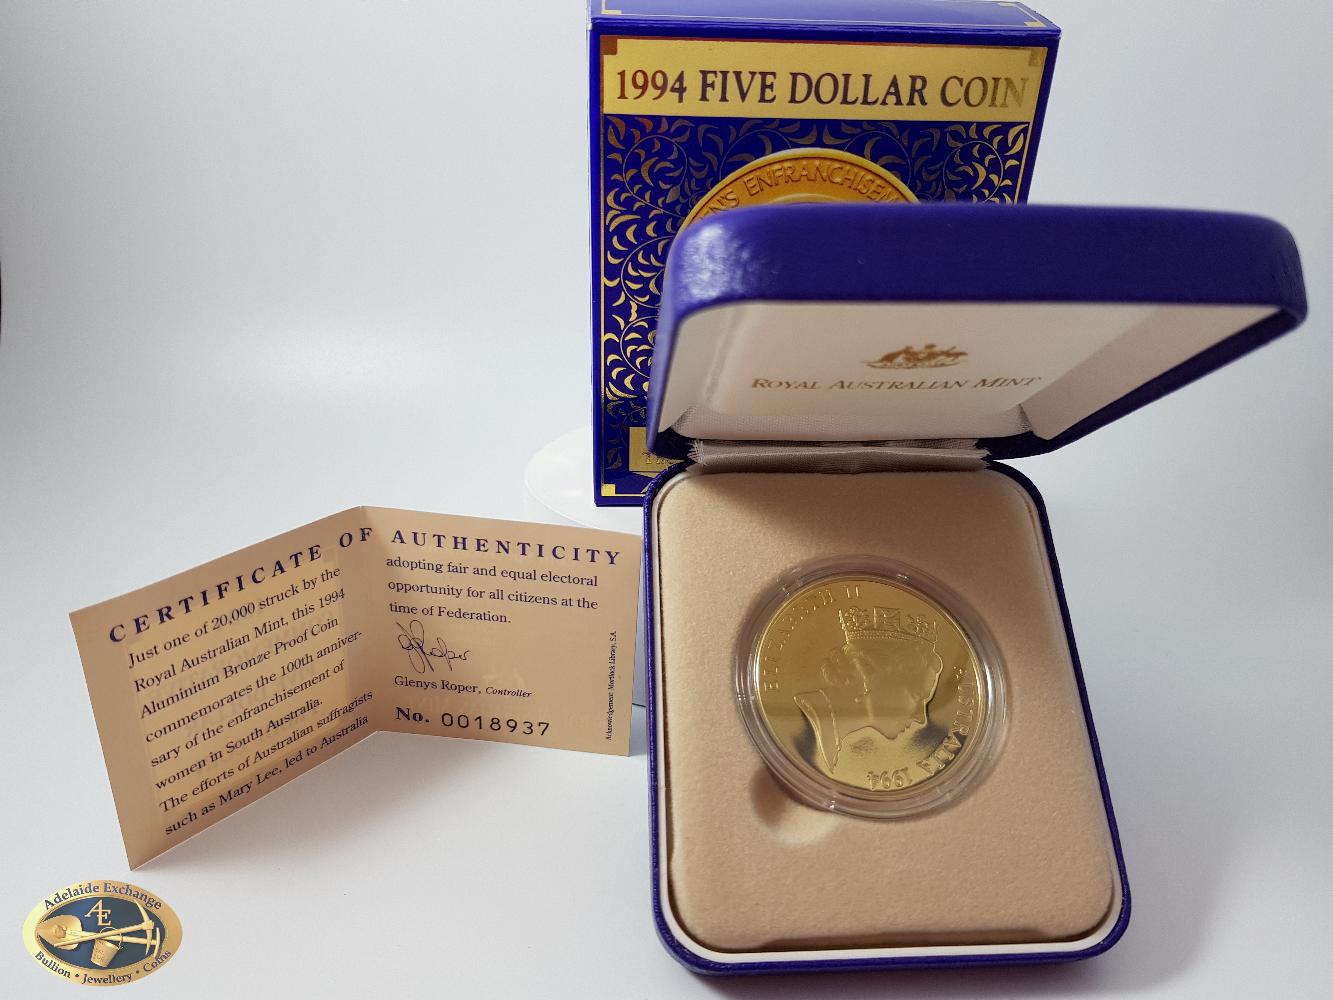 1994 $5 "The Enfranchisement of Women" proof coin 